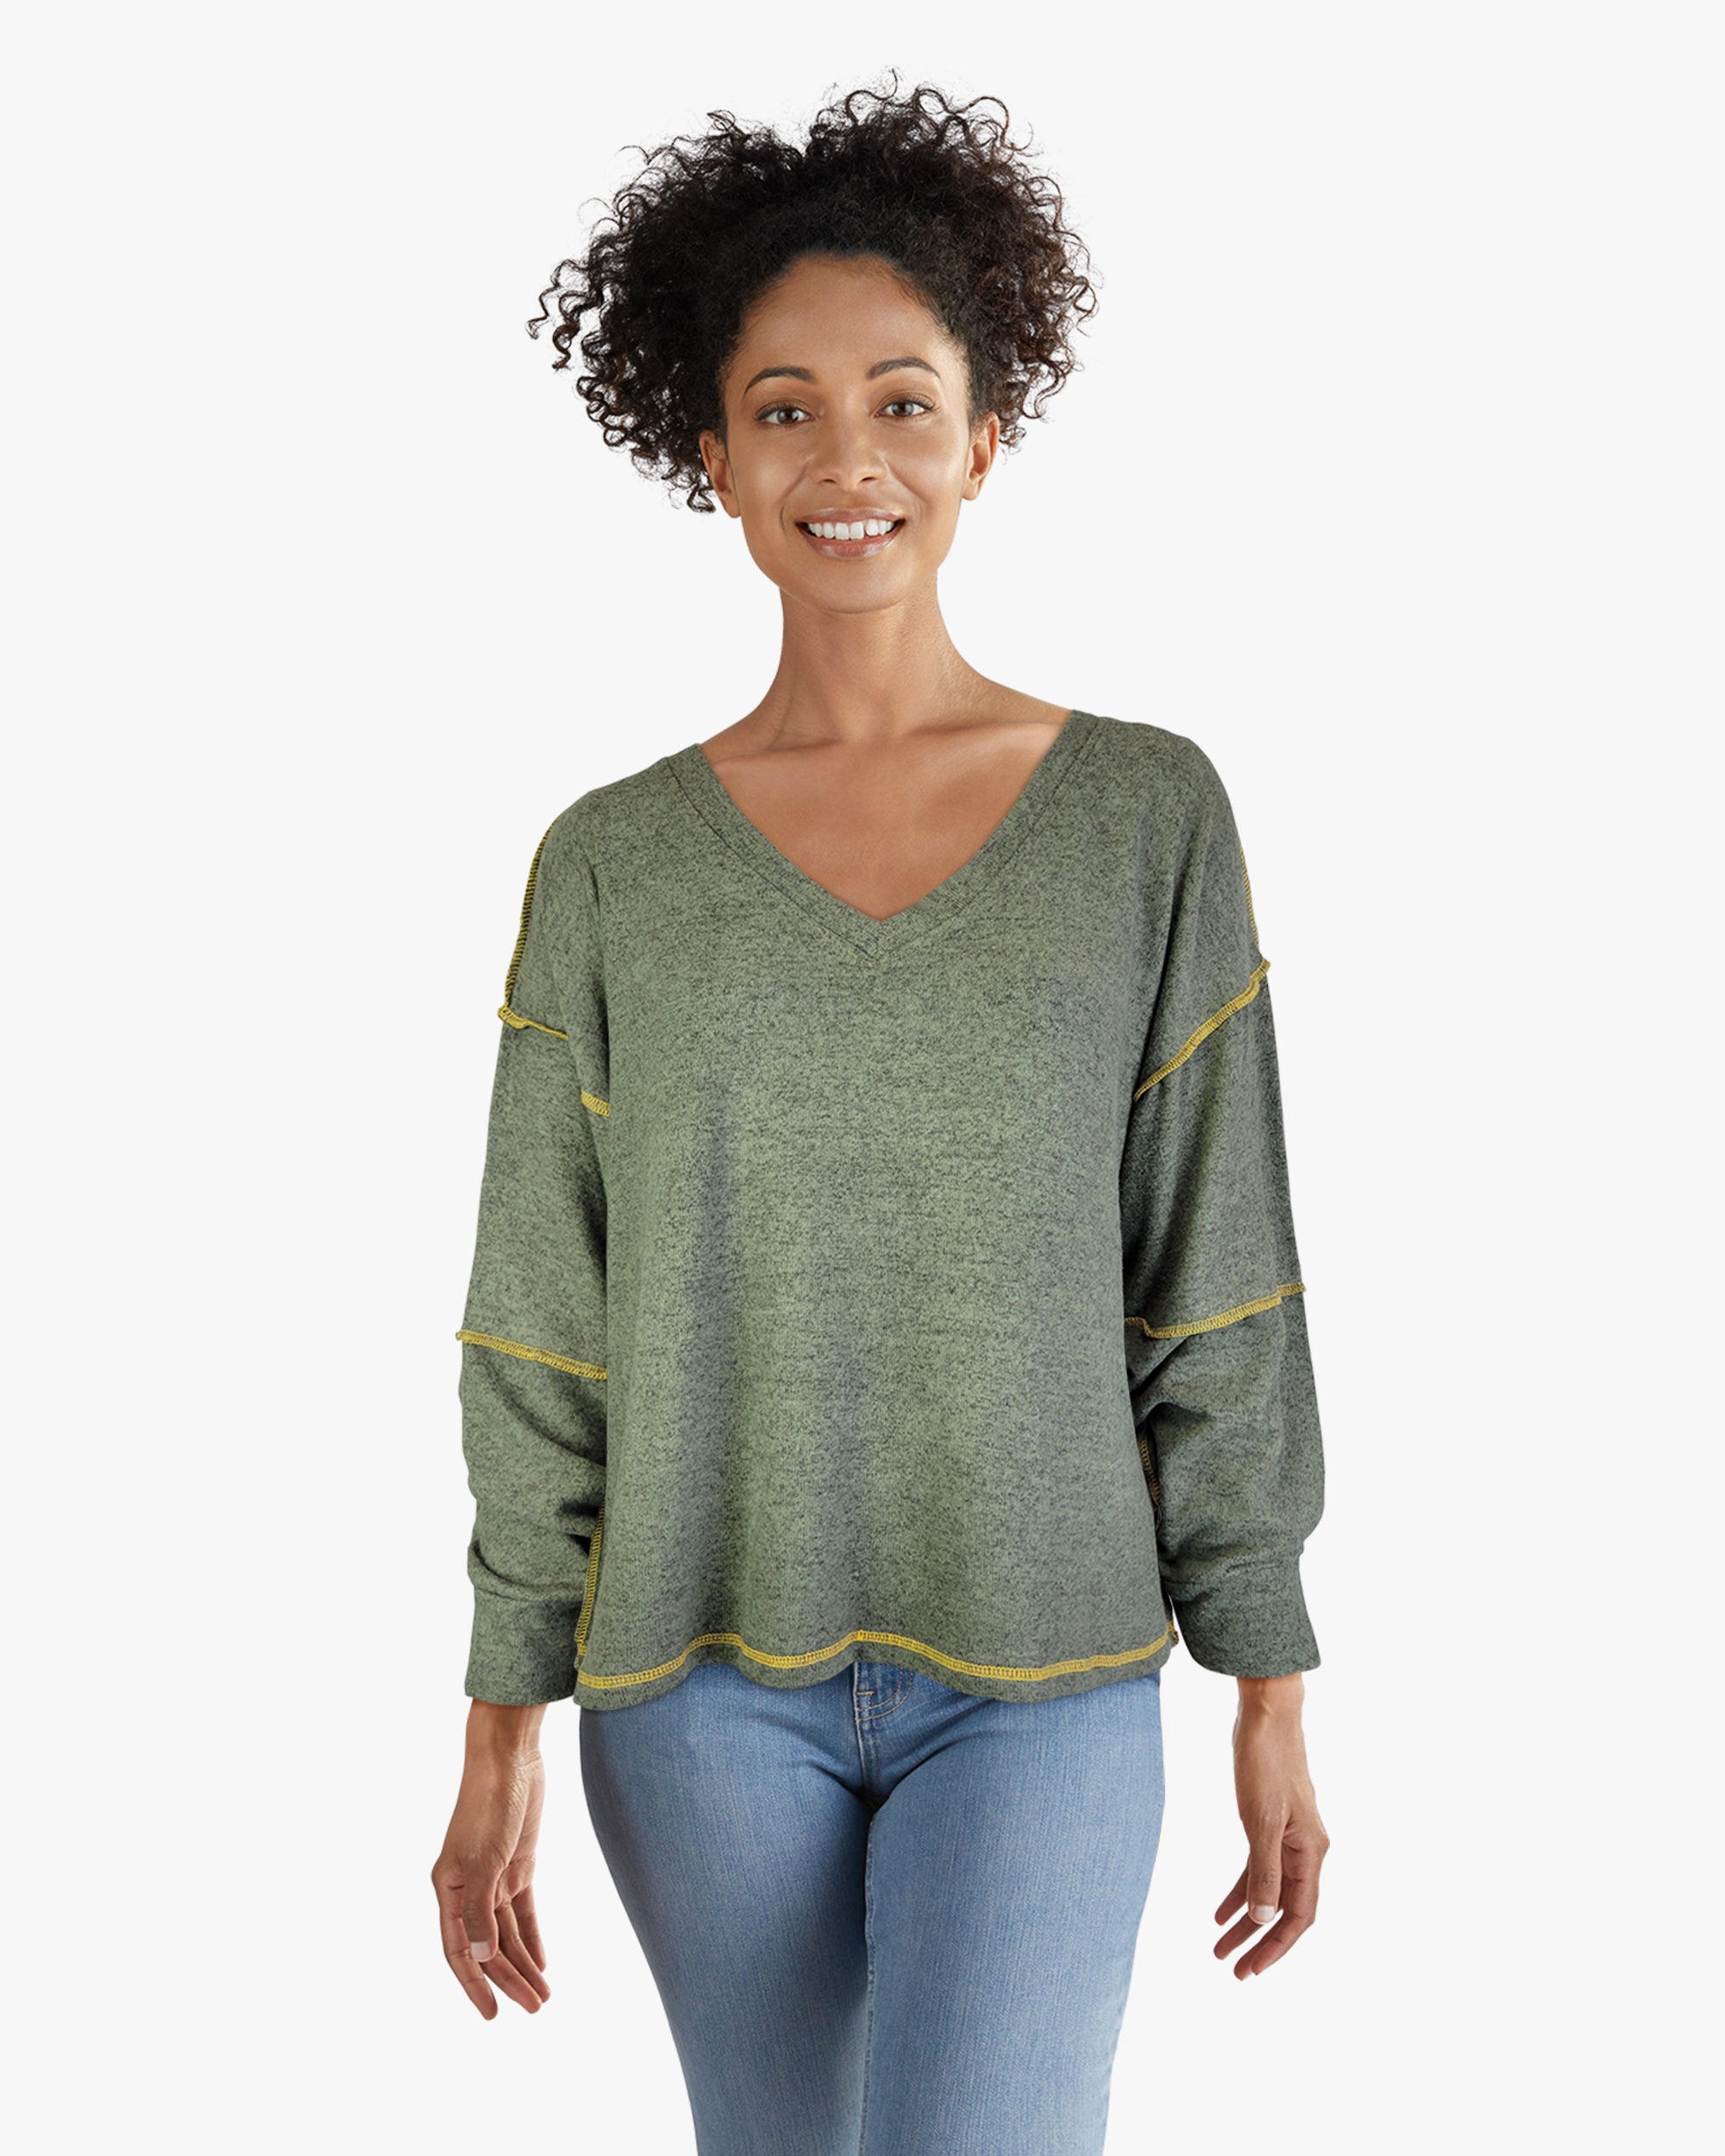 Sweater-like V Neck Top - Khaki green (D190713)